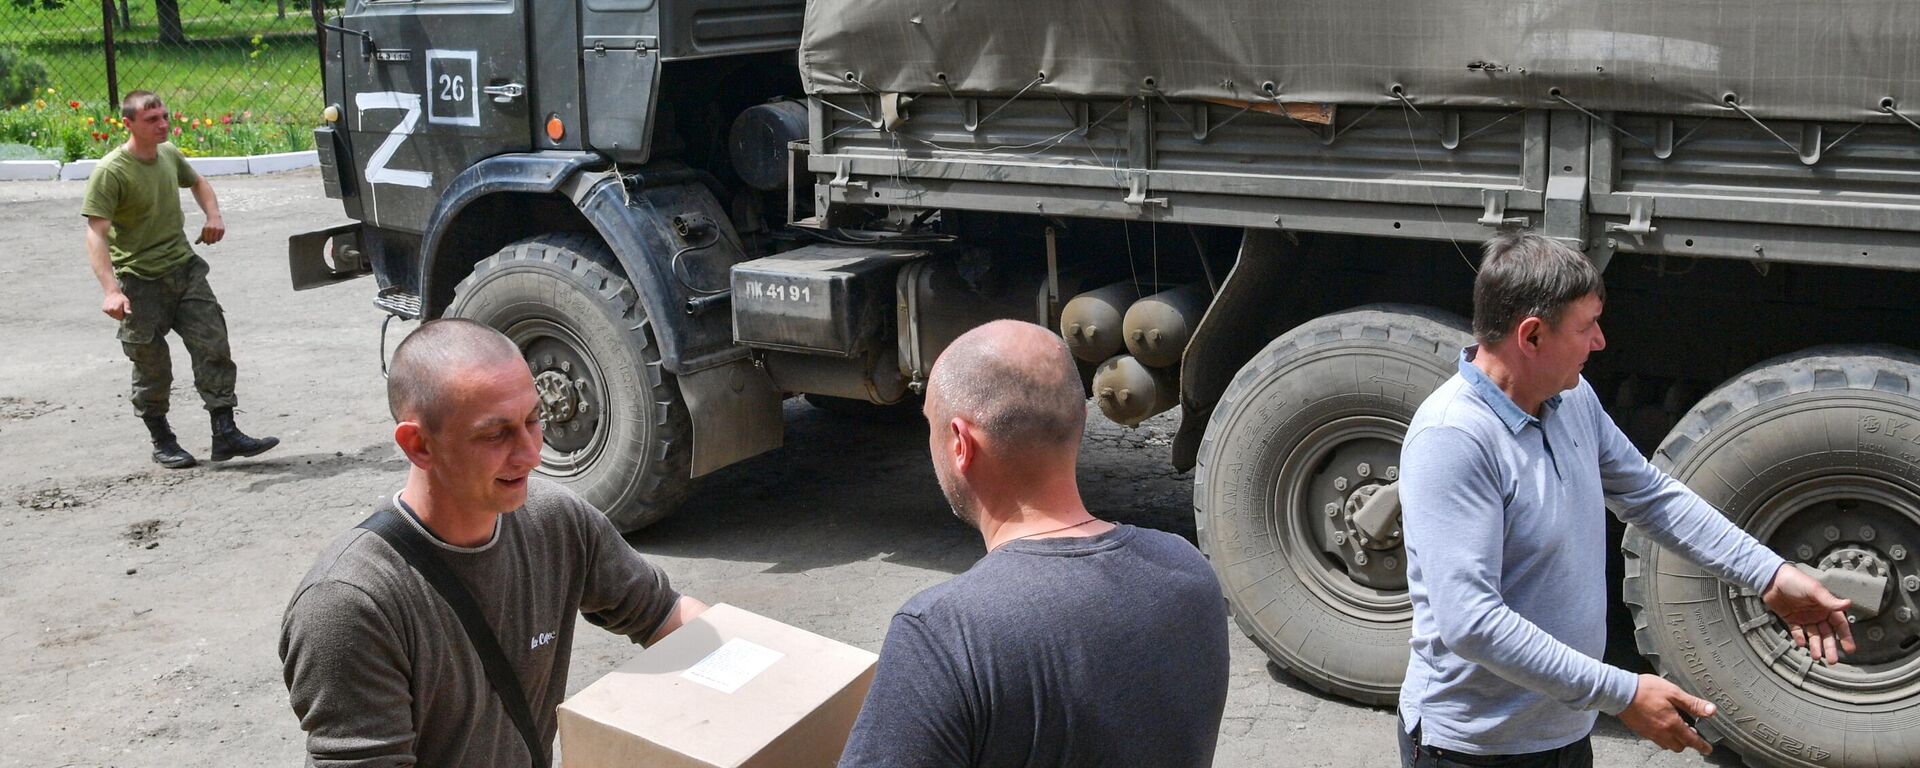 La entrega de ayuda humanitaria rusa en Ucrania - Sputnik Mundo, 1920, 16.05.2022